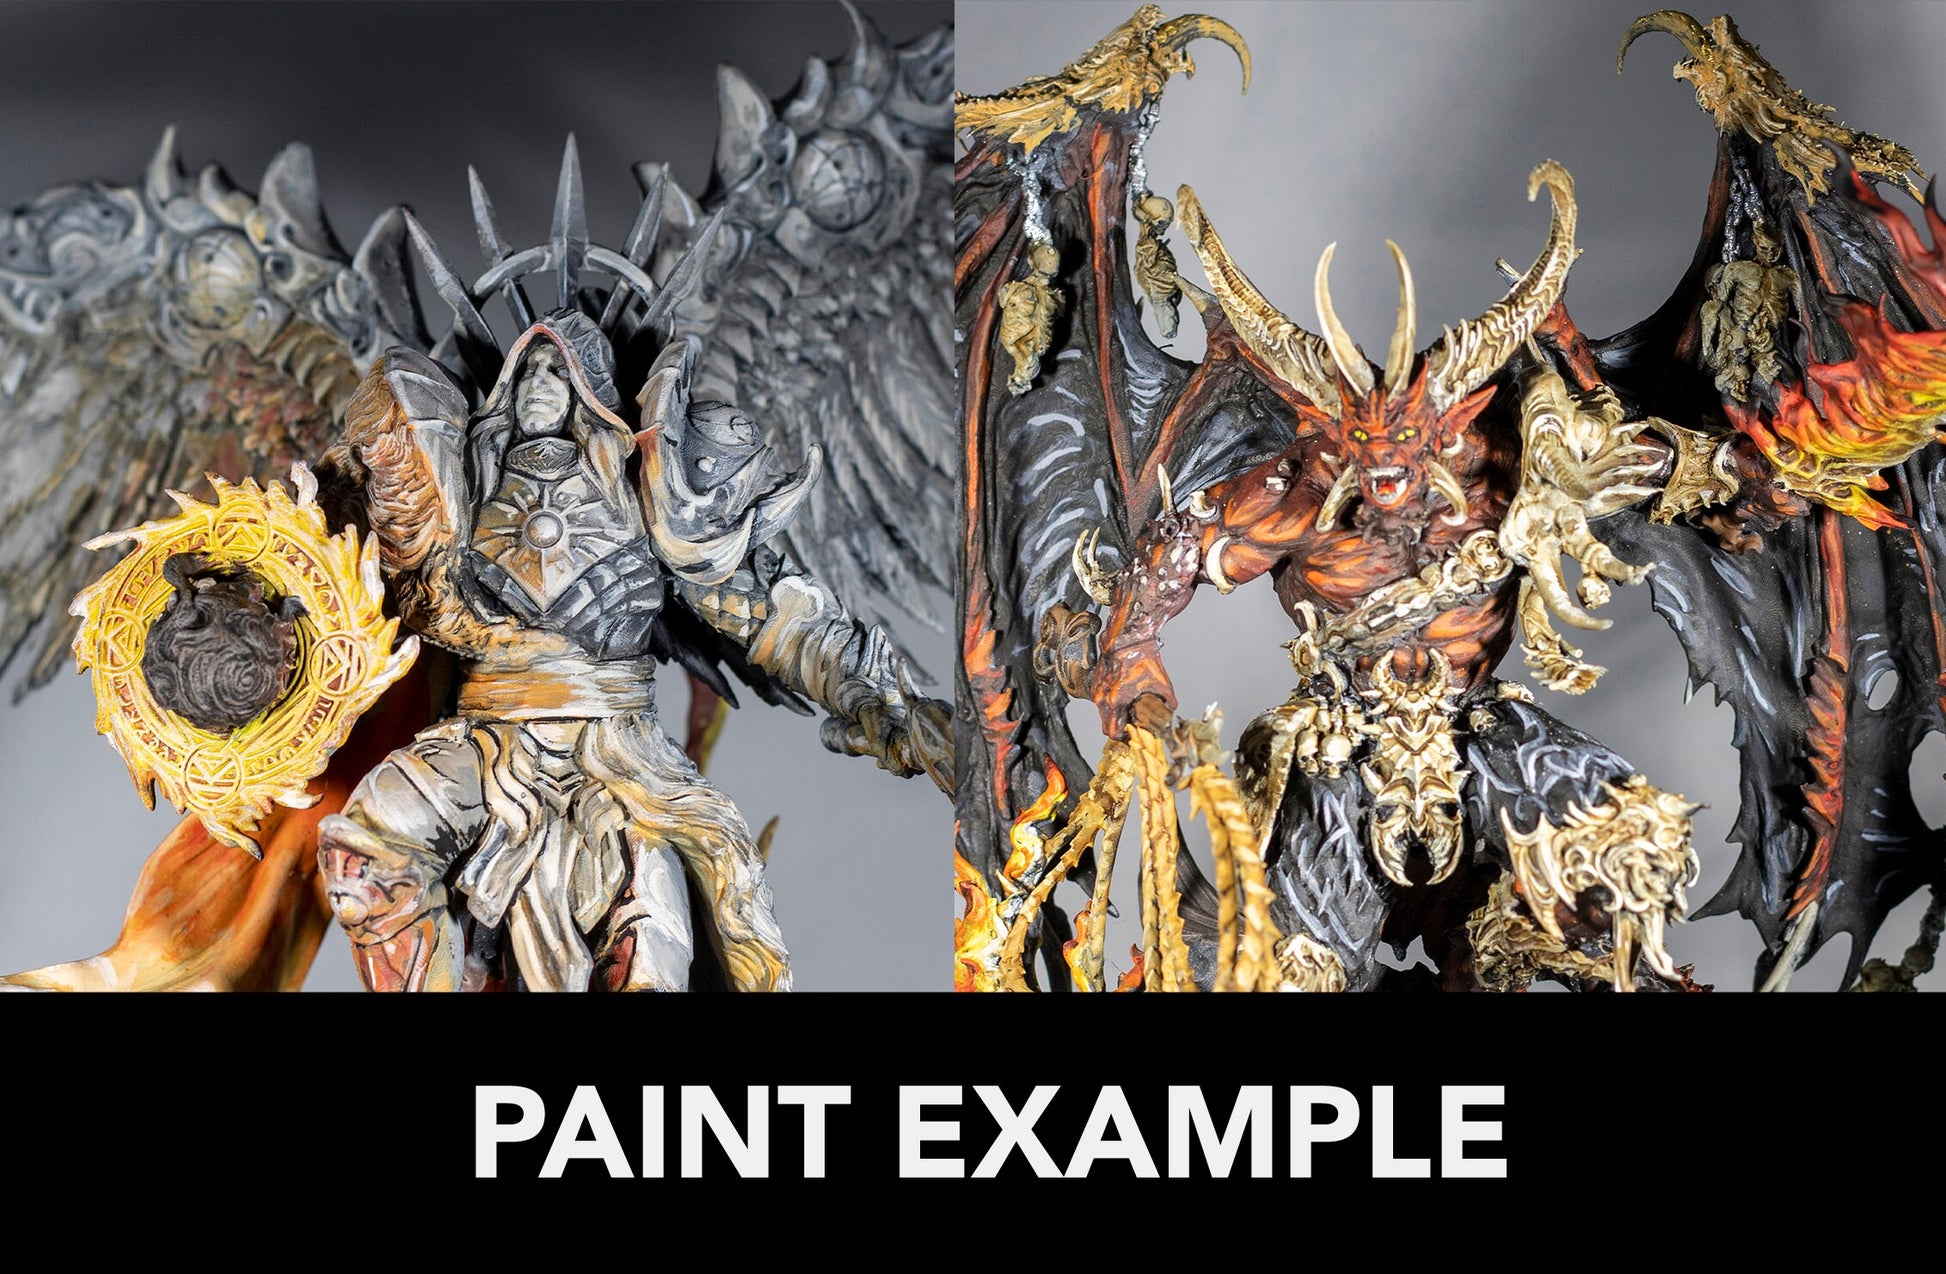 Phelaris, Centaur Archer Painted Model - Great Grimoire Printed Miniature | Dungeons & Dragons | Pathfinder | Tabletop